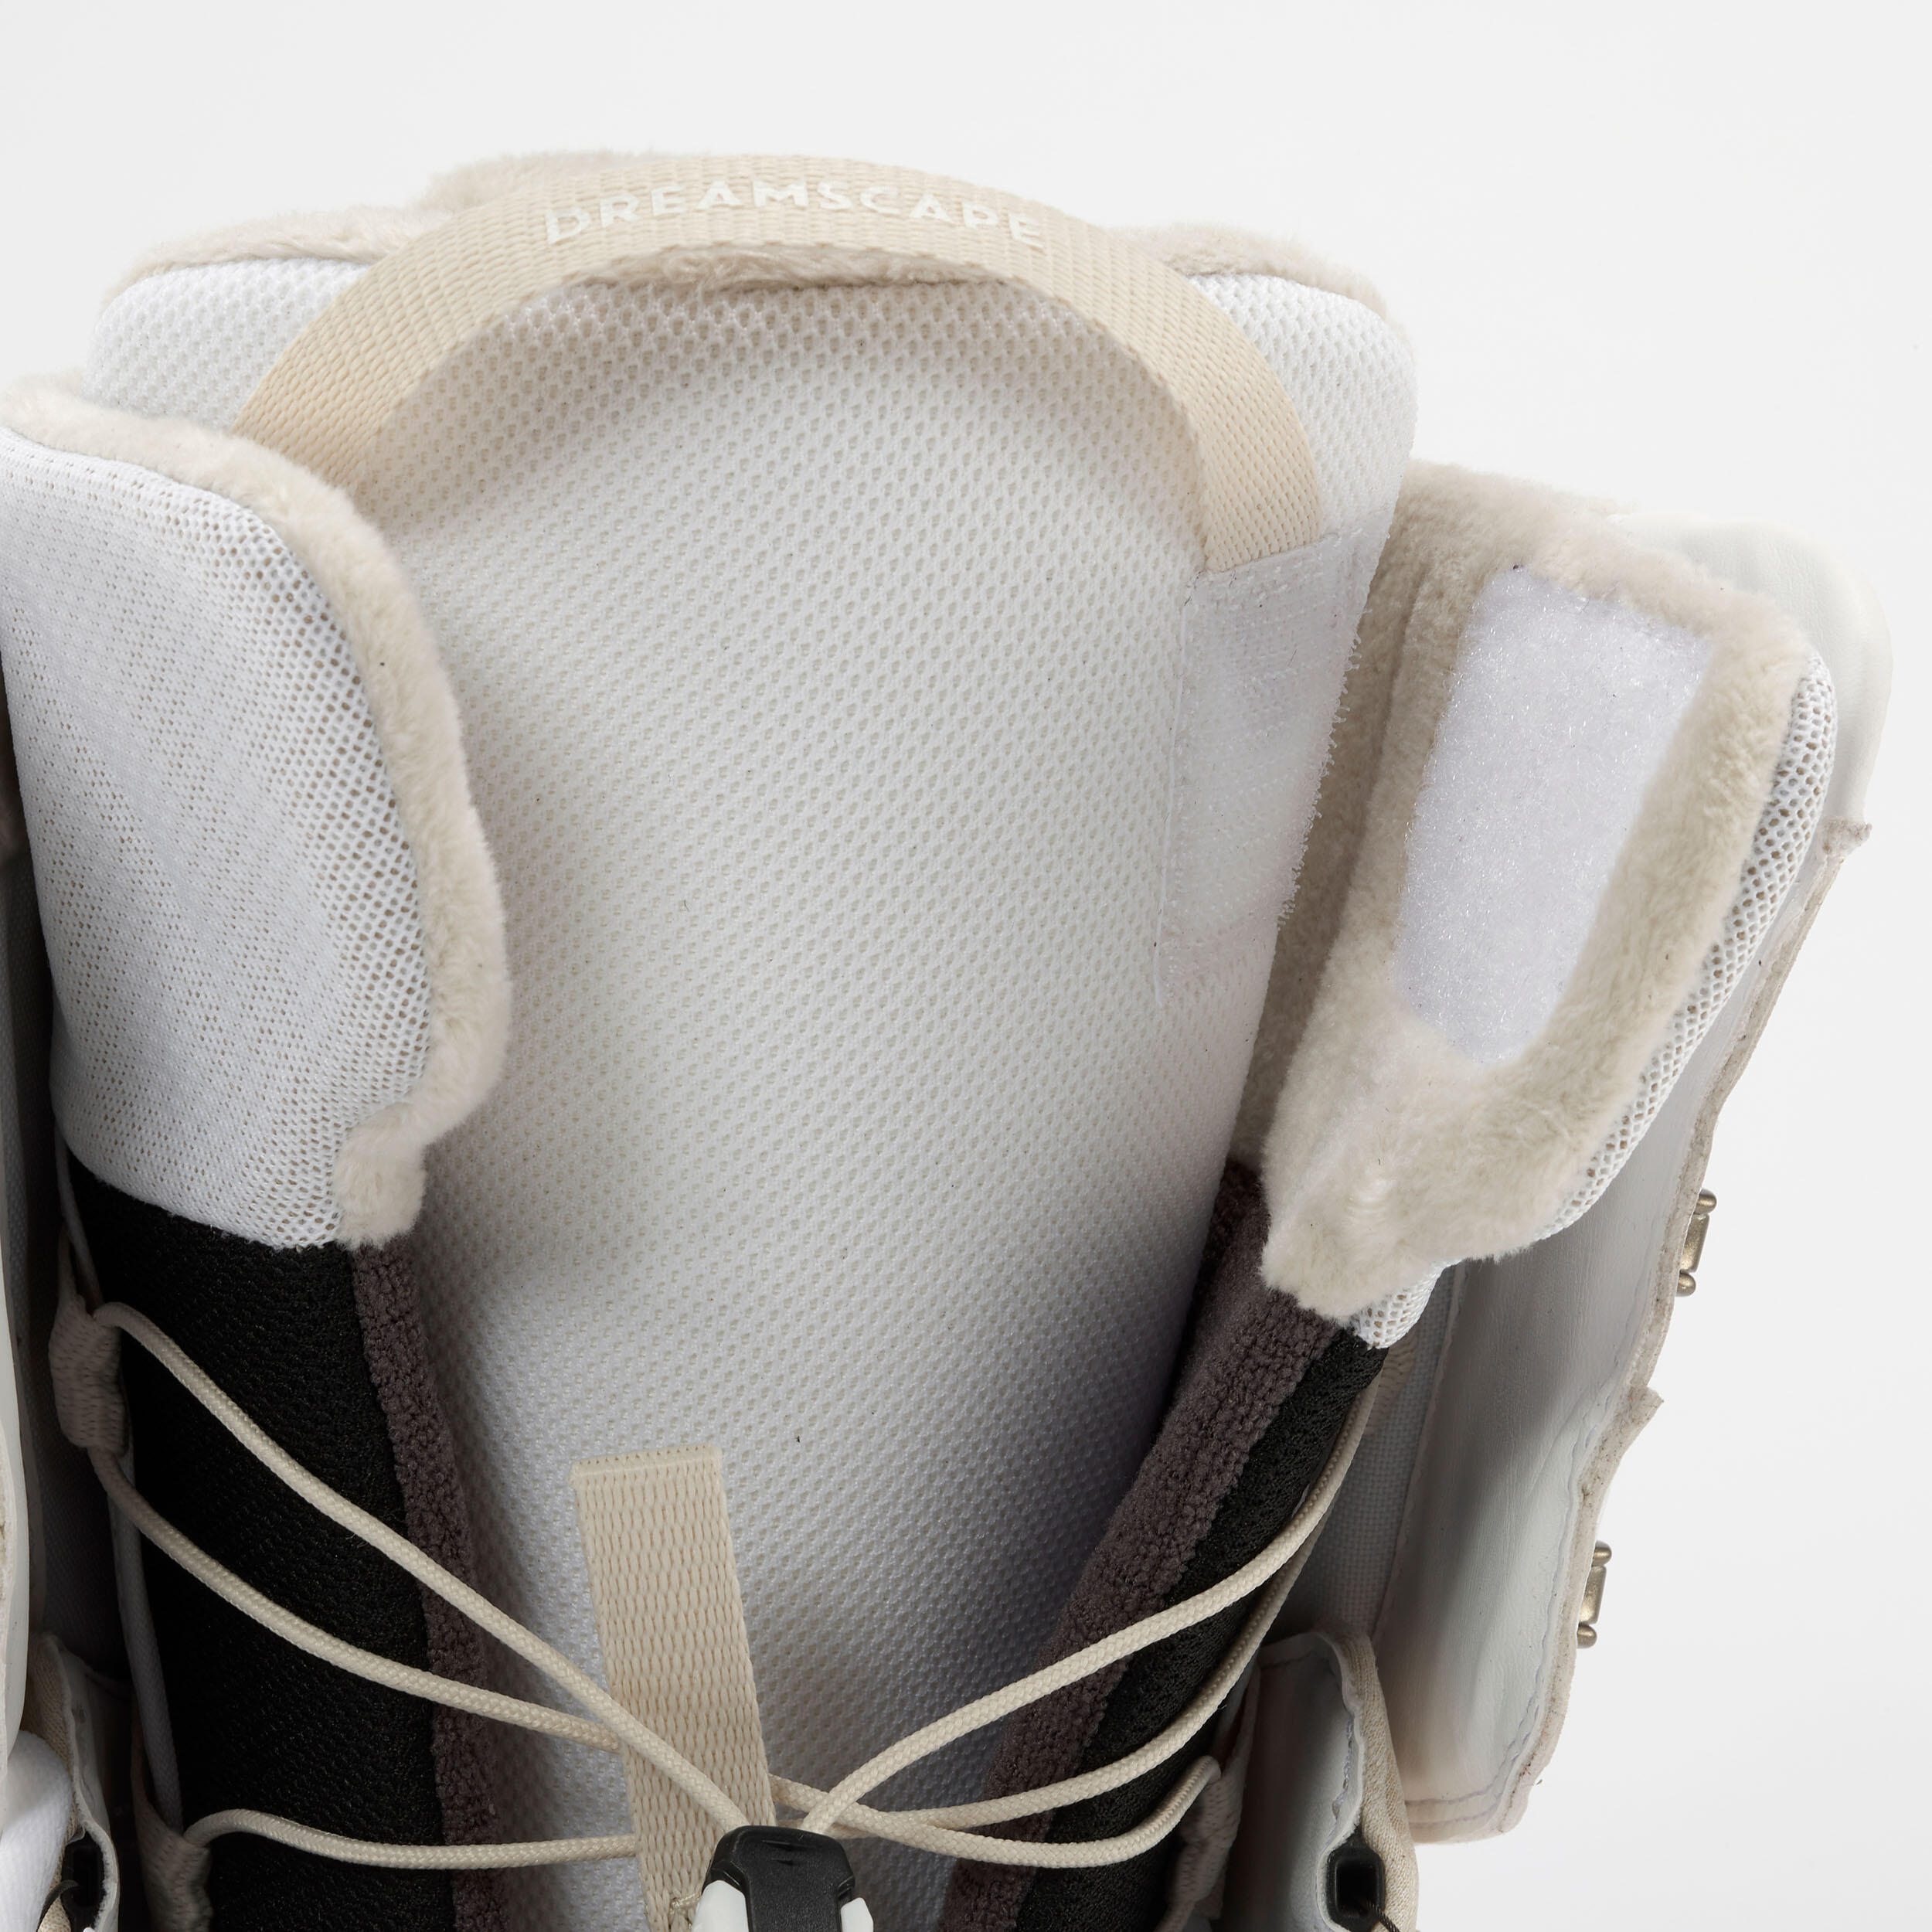 Women's hybrid snowboard boots, medium flex - Endzone white 8/14